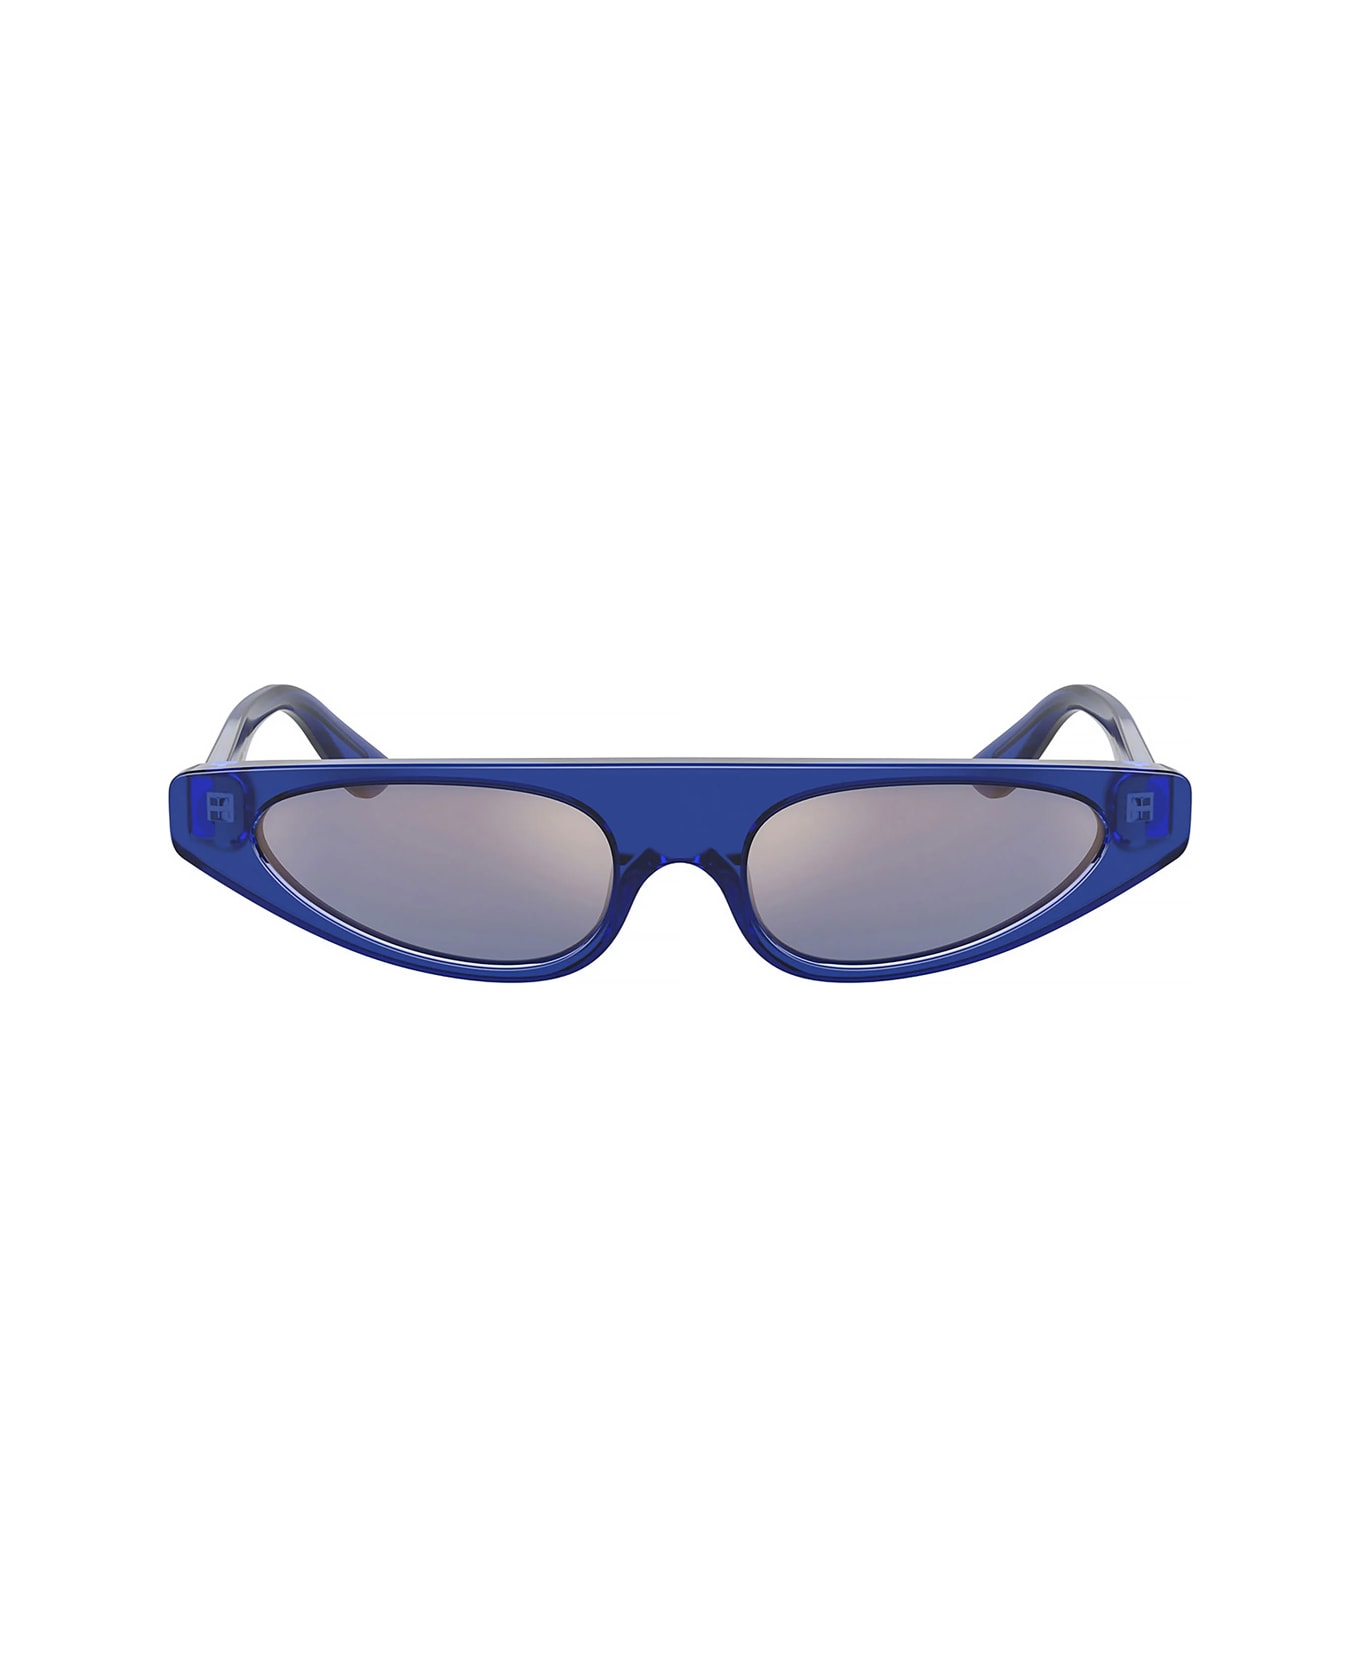 Dolce & Gabbana Eyewear Dg4442 339833 Sunglasses - Blu